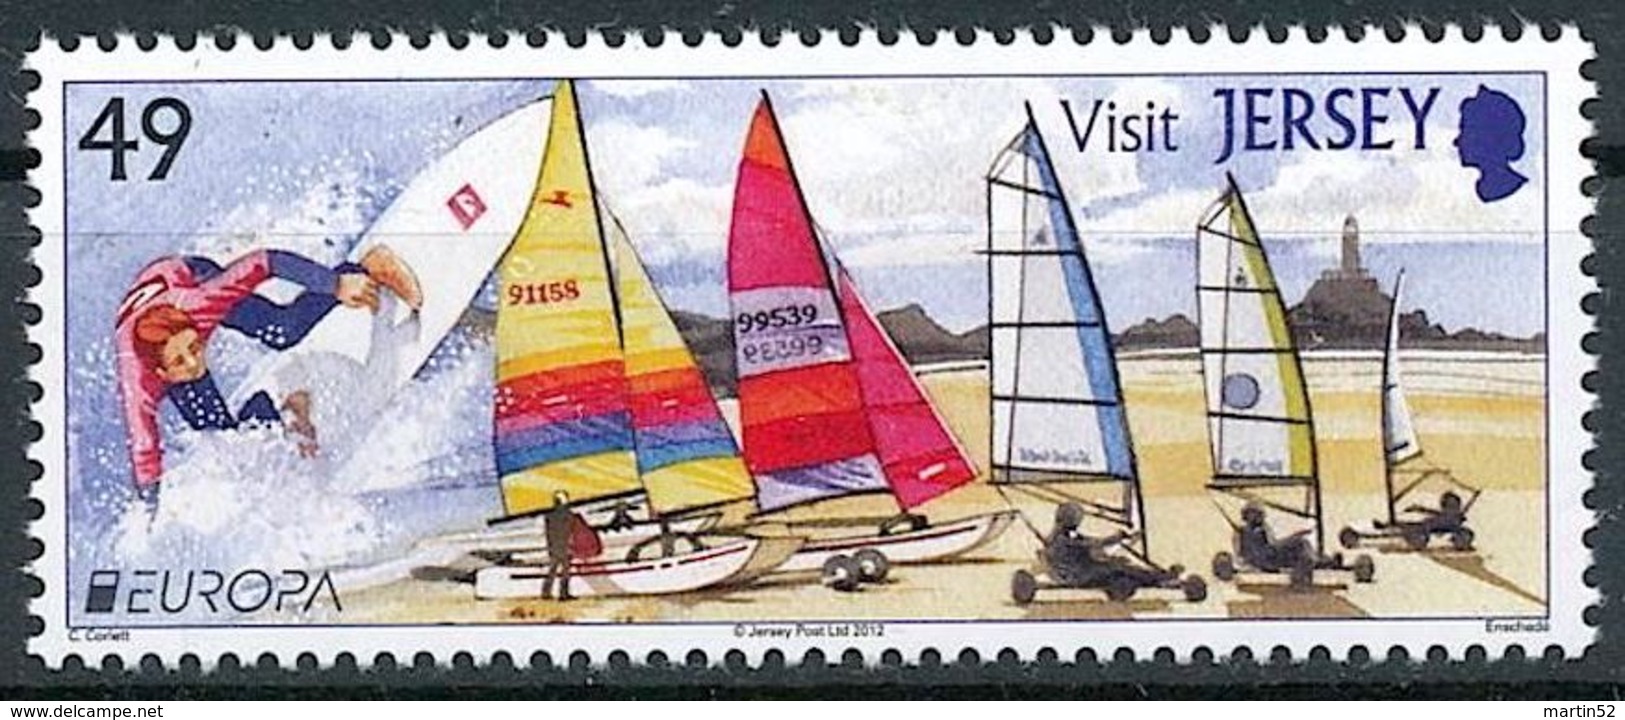 Jersey 2012: "Surfing, Sailing & Windsurfing" Michel-No. 1615 ** MNH - START BELOW POSTAL FACE VALUE (£ 0.49) - Waterski